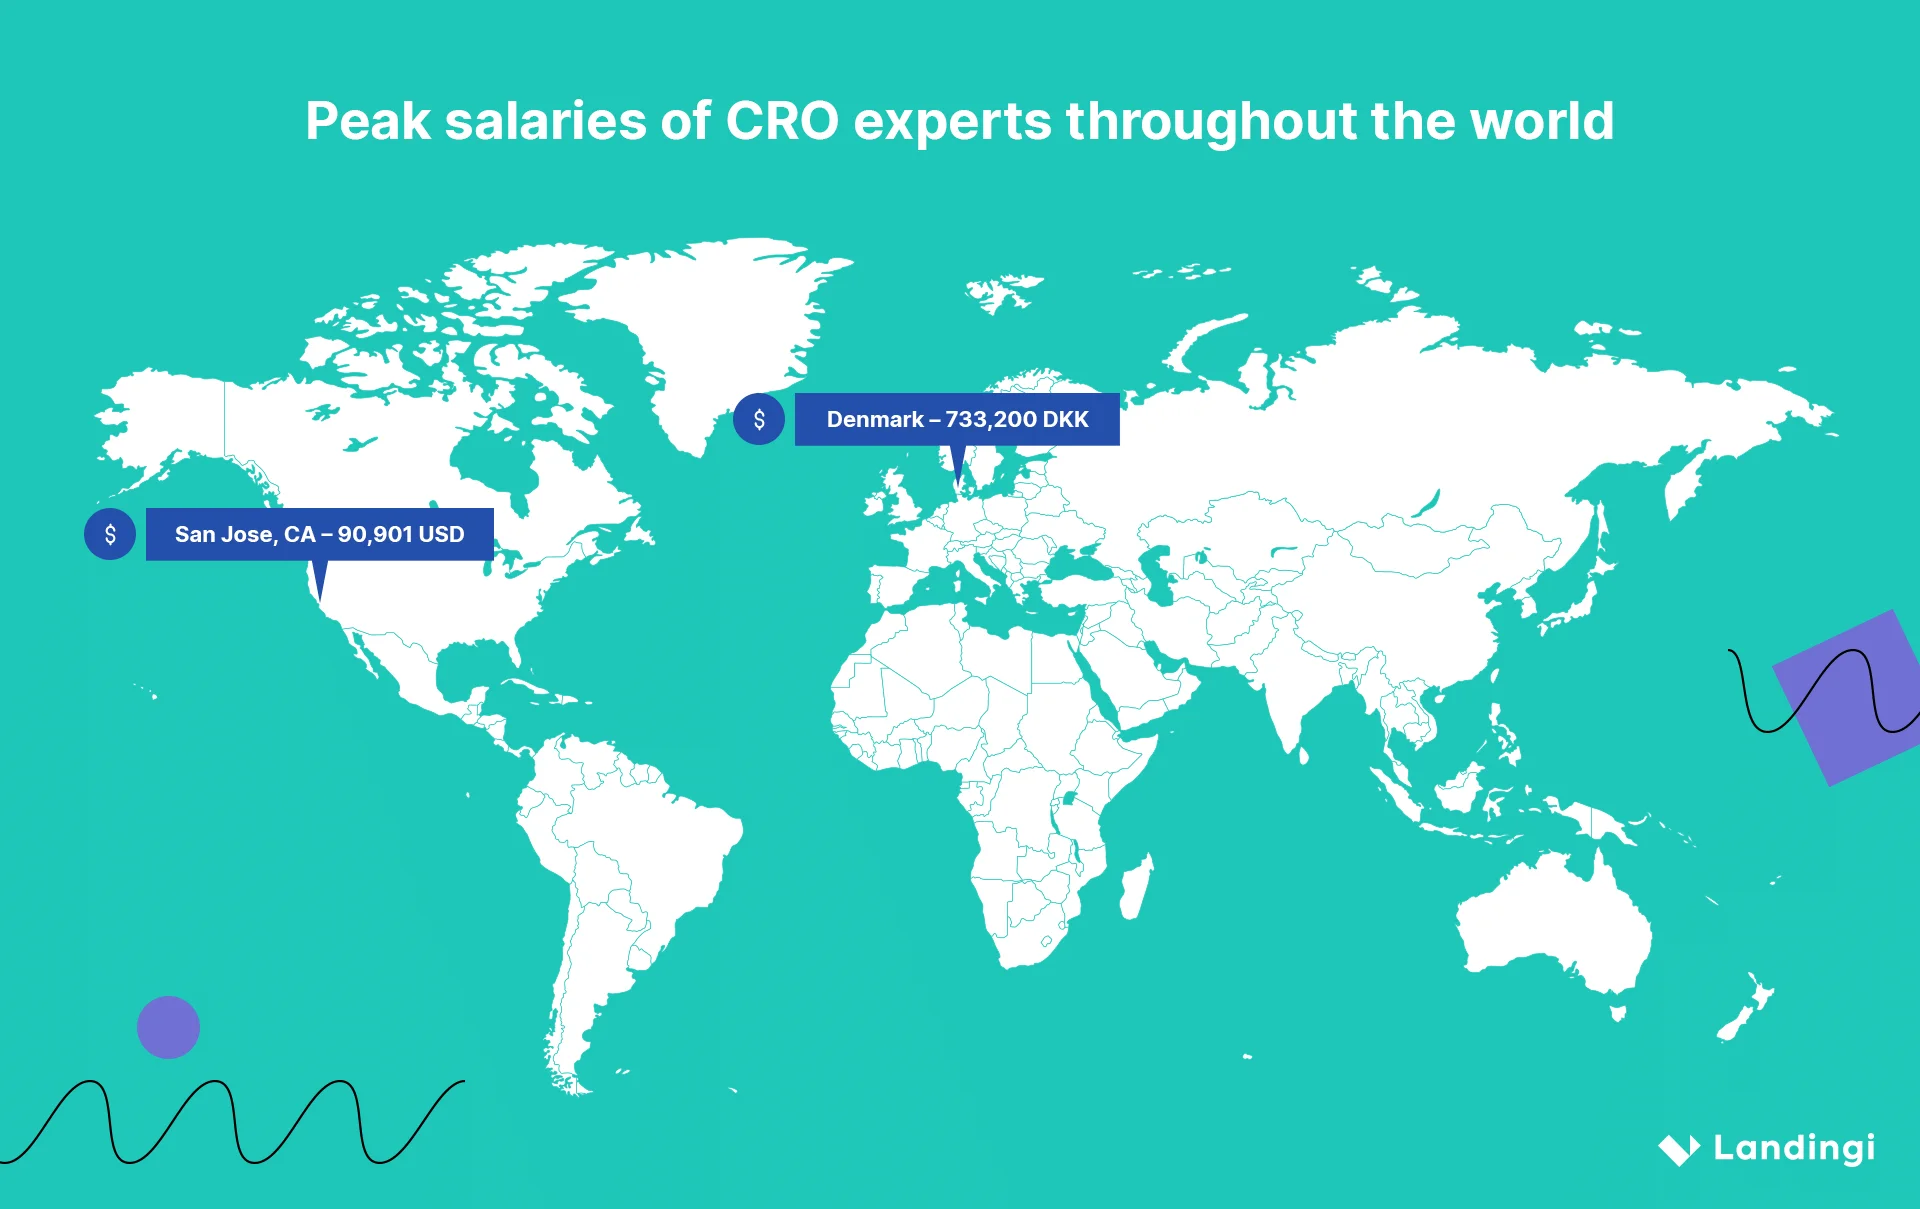 CRO experts top salaries